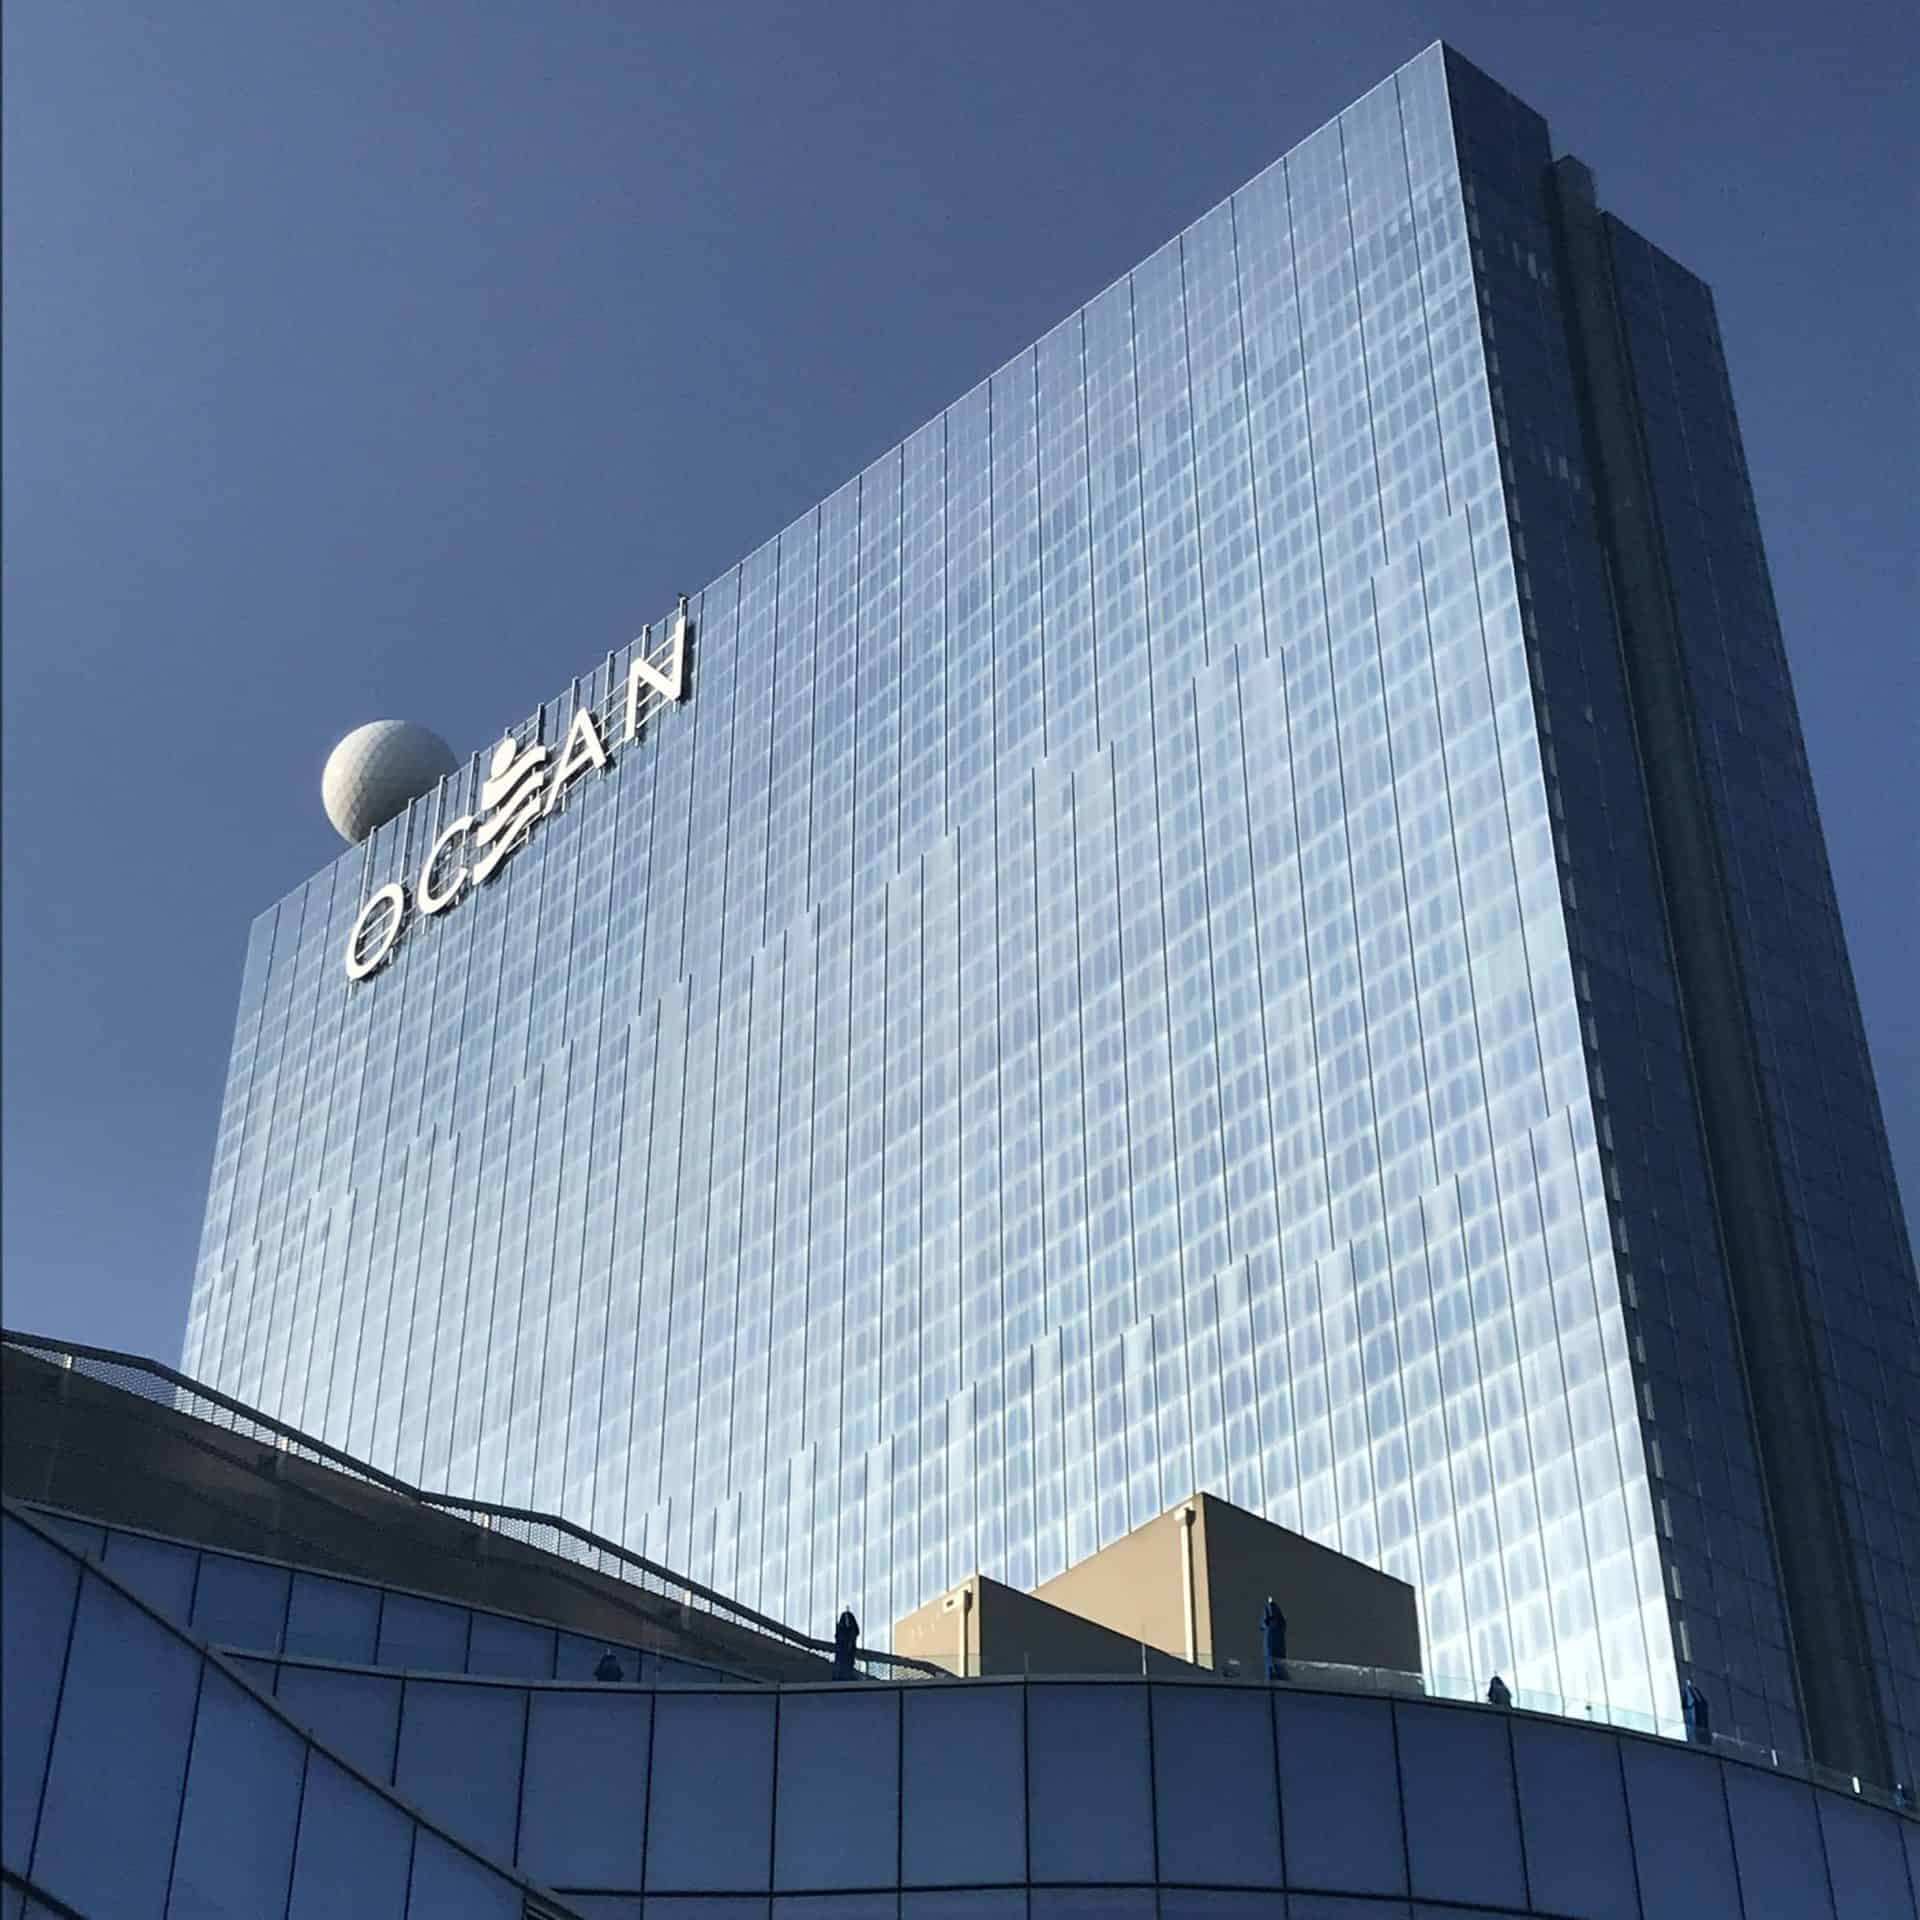 ocean view casino atlantic city